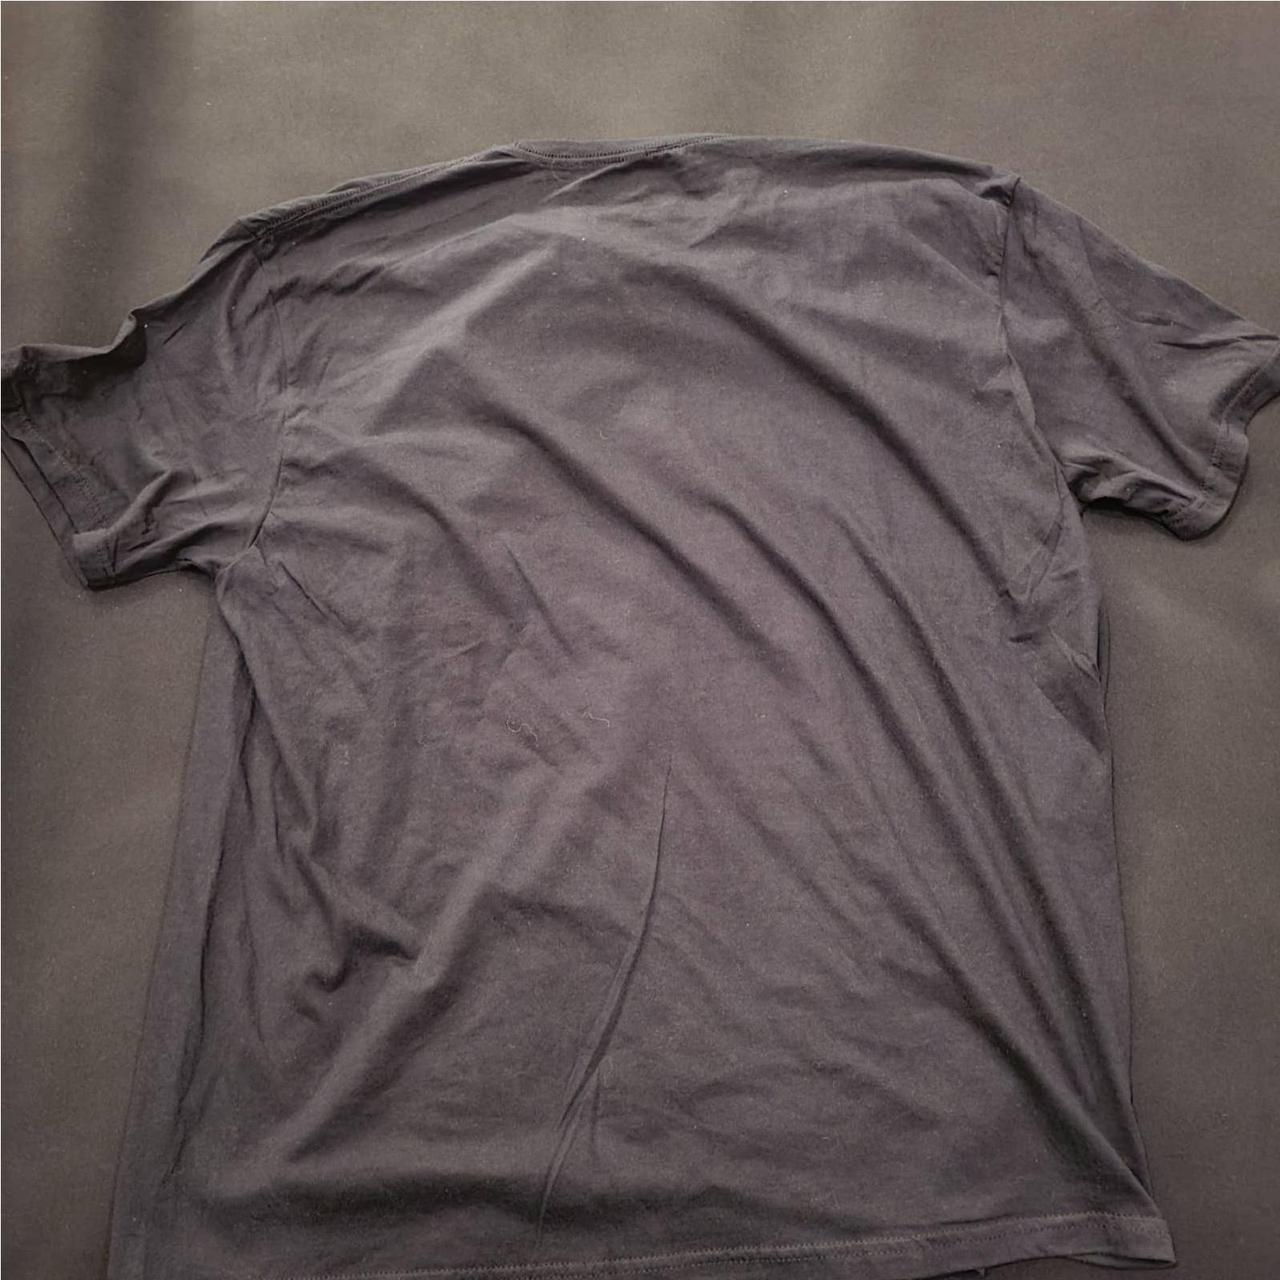 Cheech & Chong Los Doyers t-shirt Medium - Depop